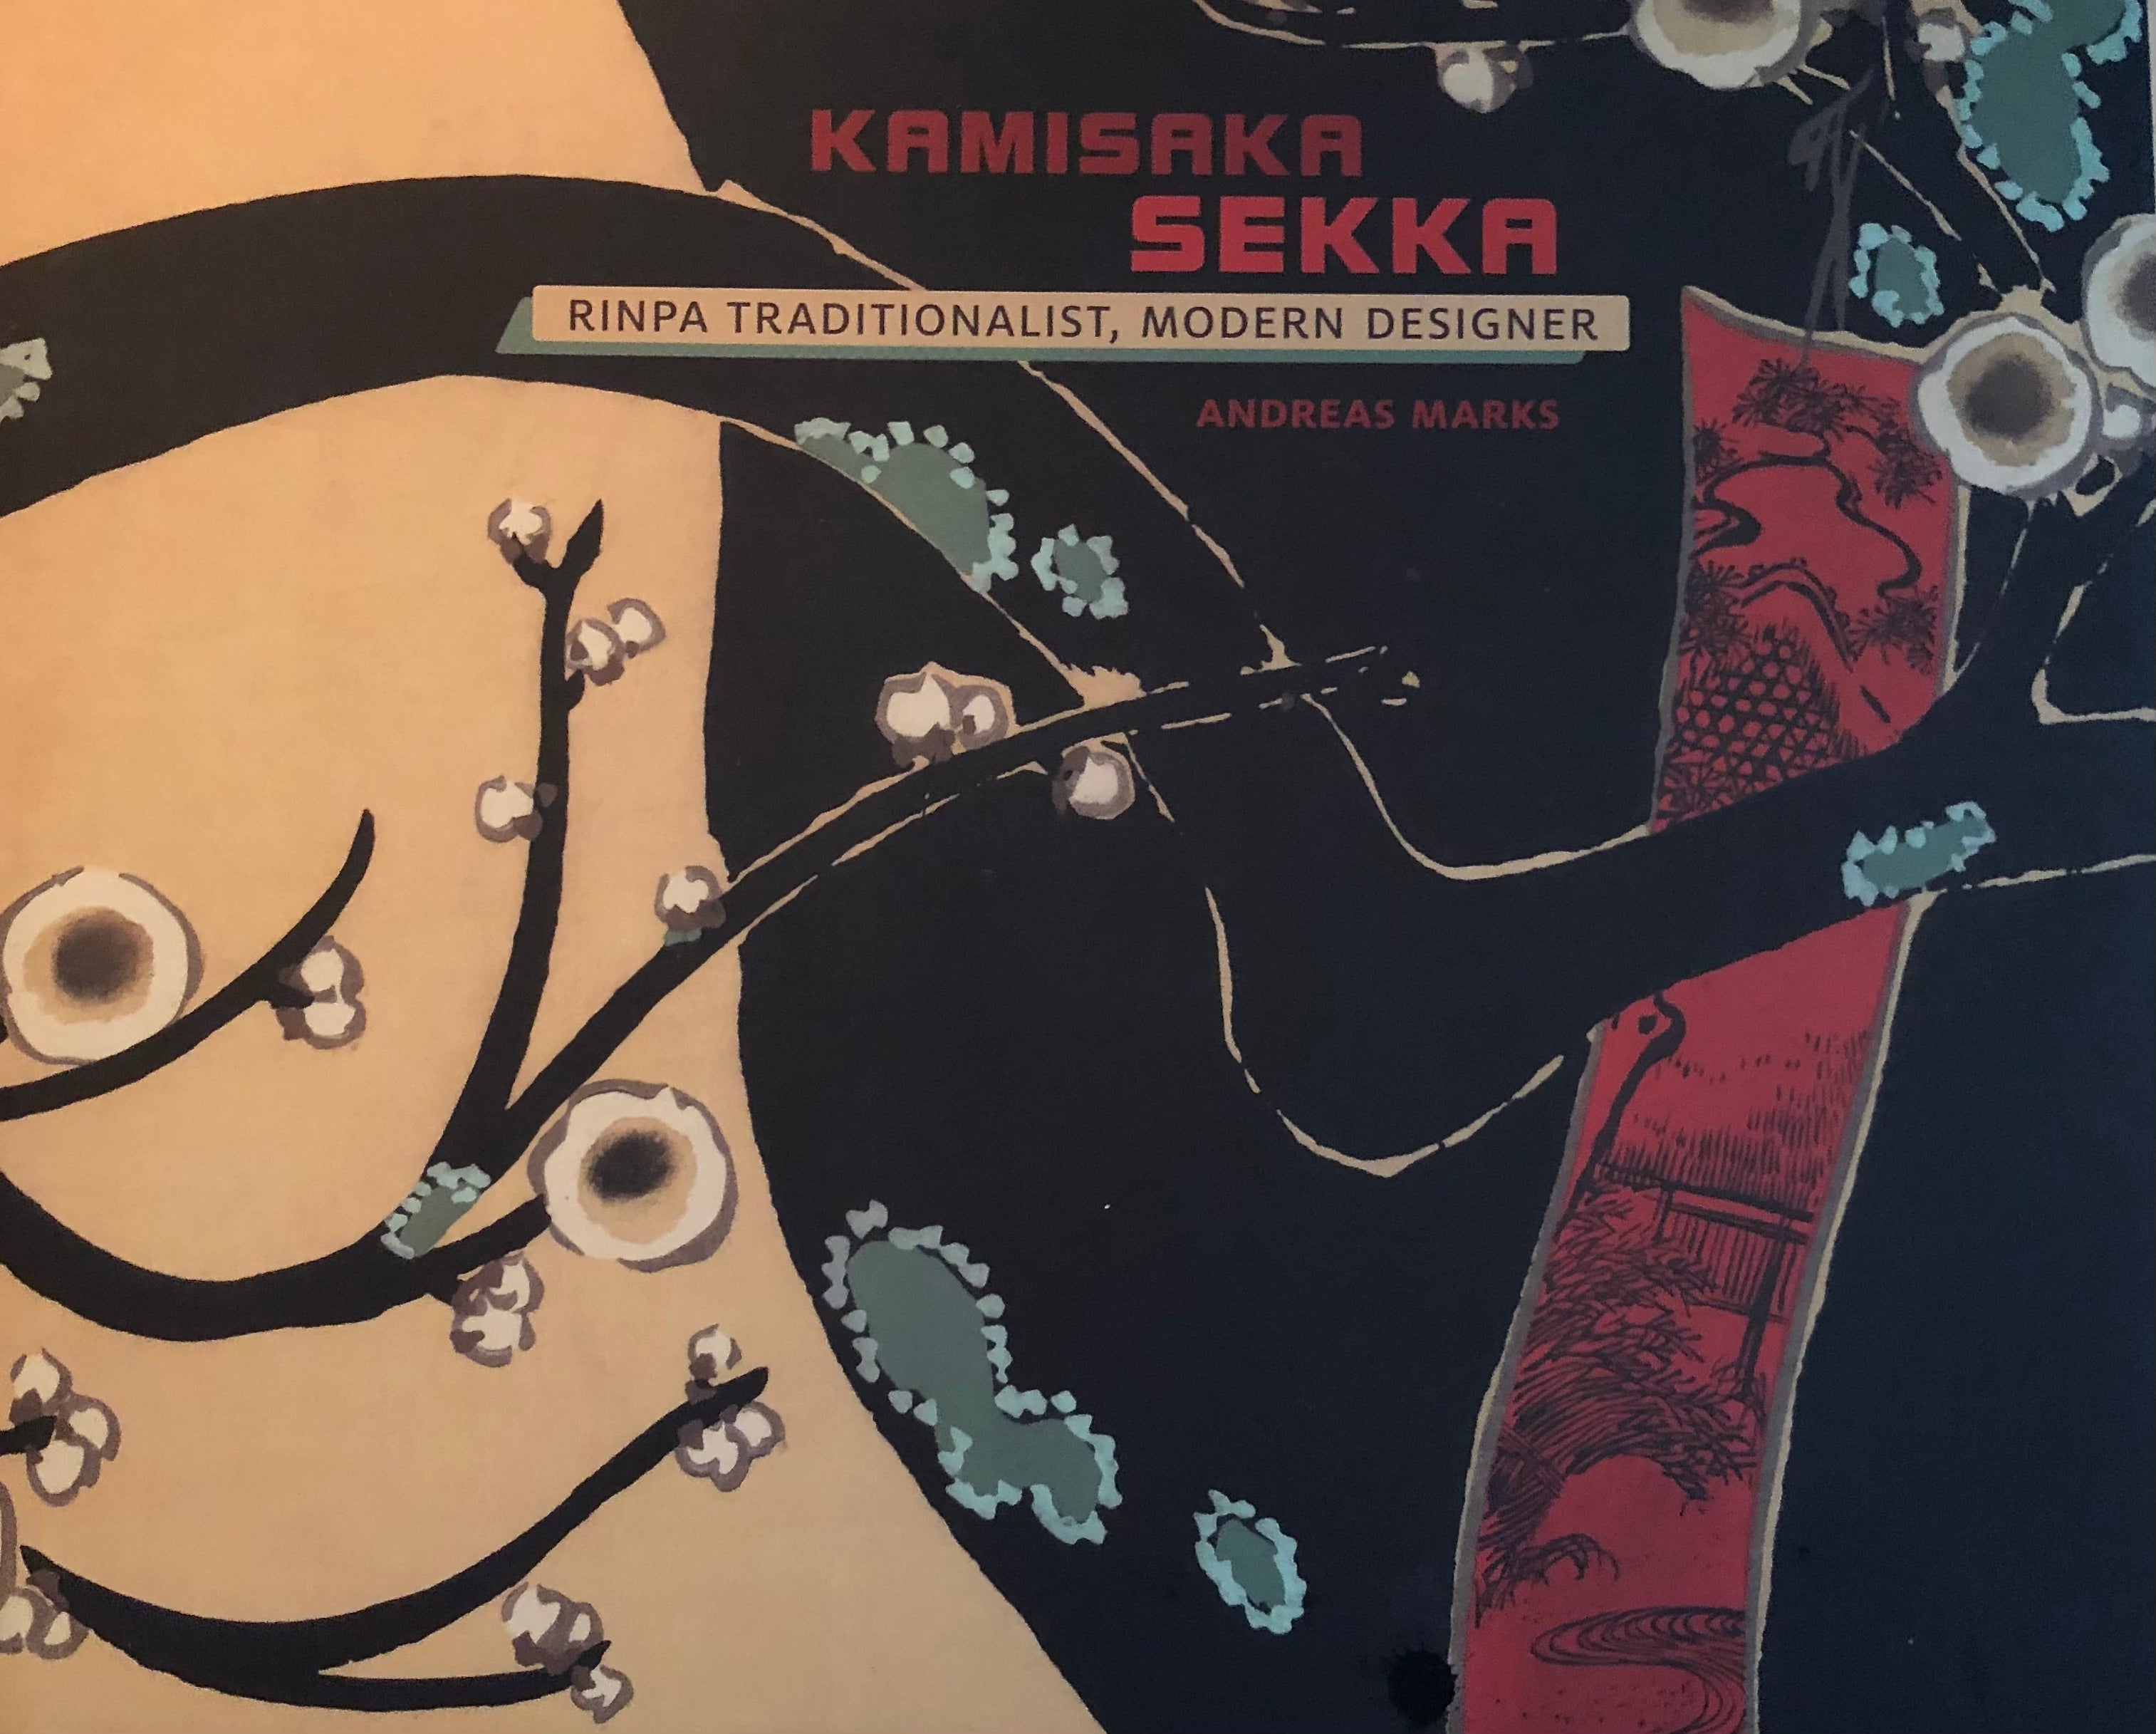 Kamisaka Sekka: Rinpa Traditionalist, Modern Designer by Andreas Marks